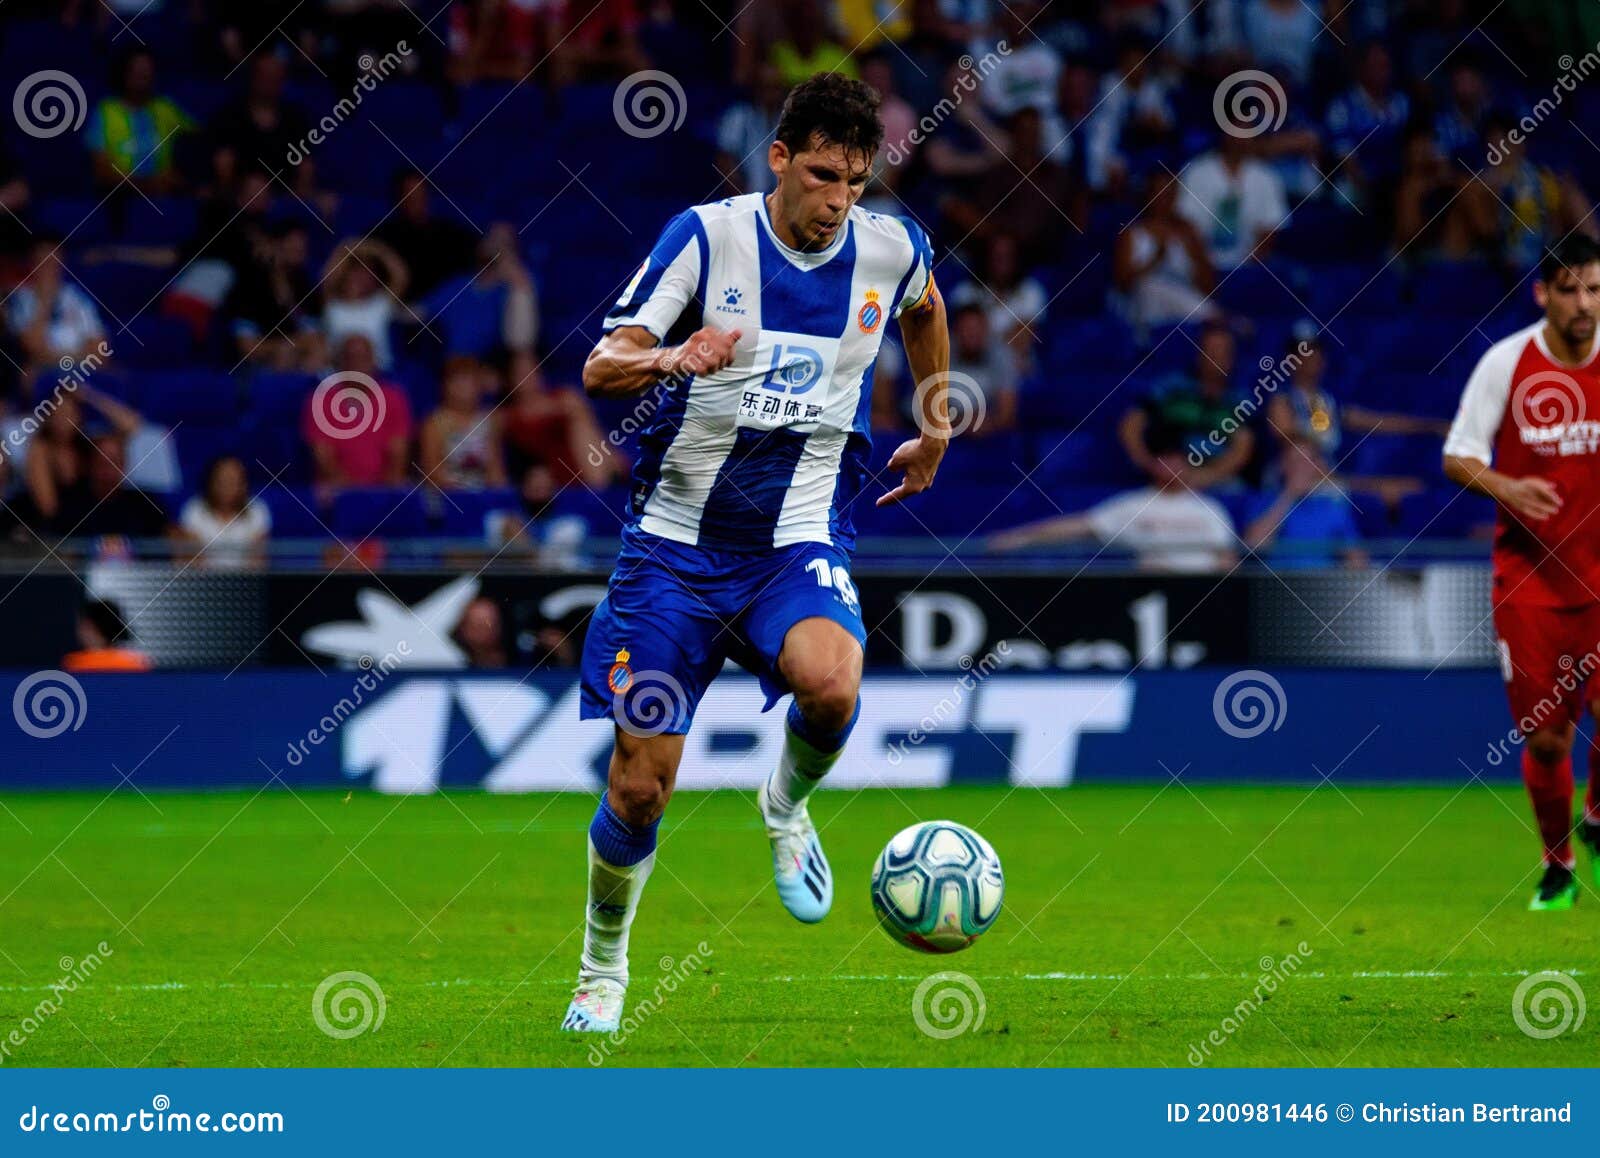 Javi Lopez Plays at the La Liga Match between RCD Espanyol and Sevilla CF at the RCDE Stadium Editorial Photo - Image of professional, stadium: 200981446